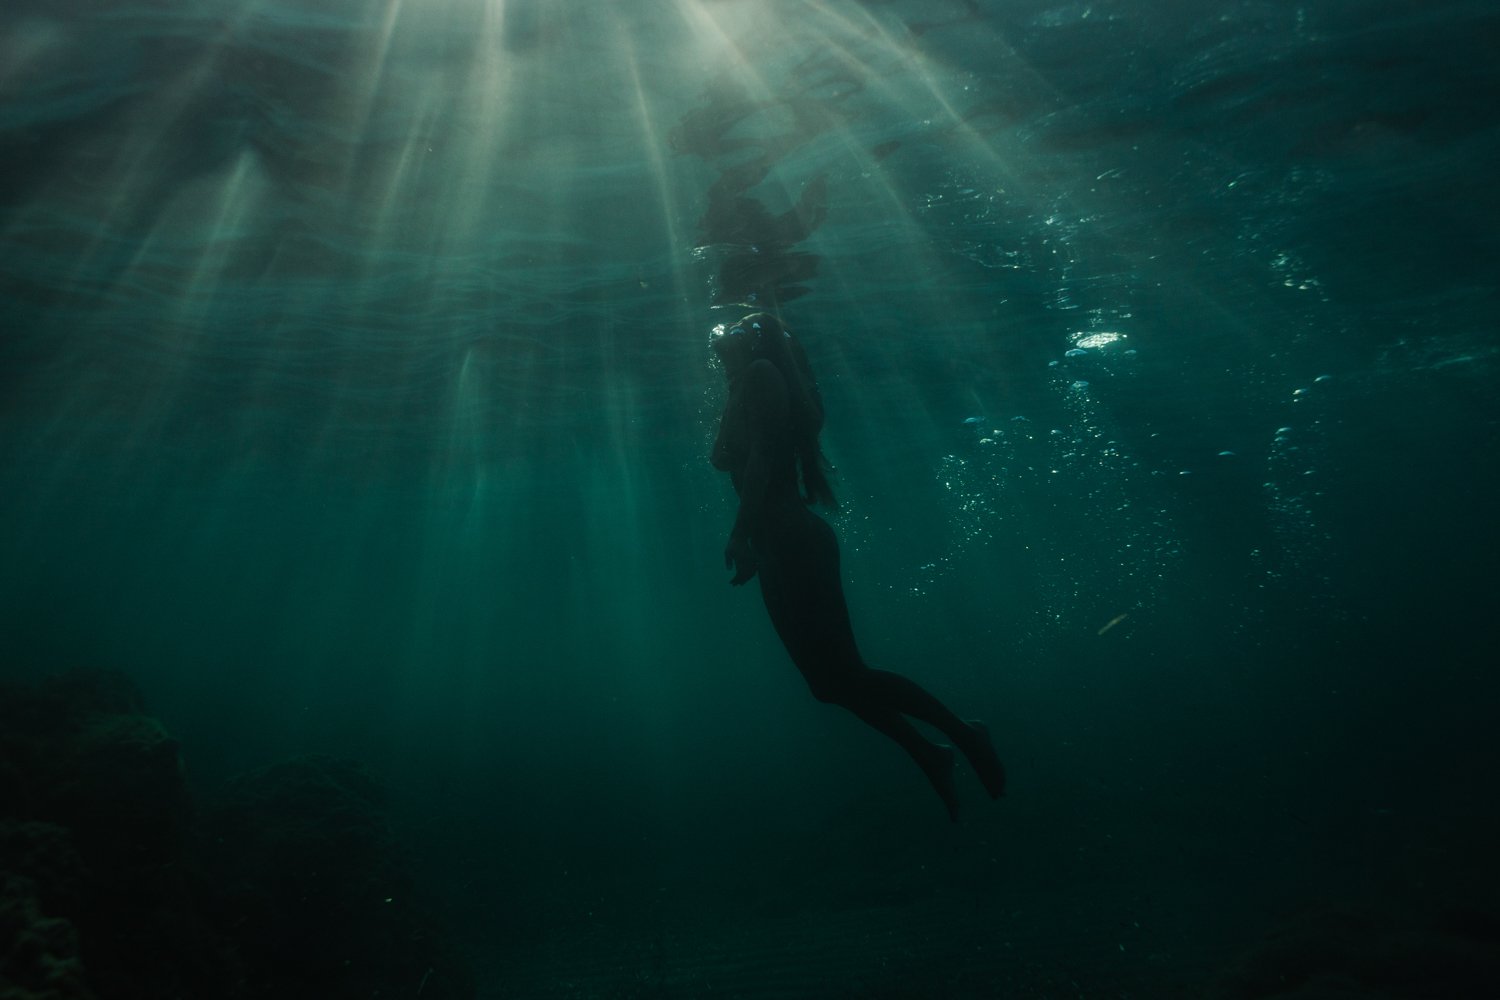 siren sirens corse corsica underwater photography photographe sous leau mermaid femme woman women nude nue fine art photography Krista Espino ajaccio sea Mediterranean france travel-12.jpg